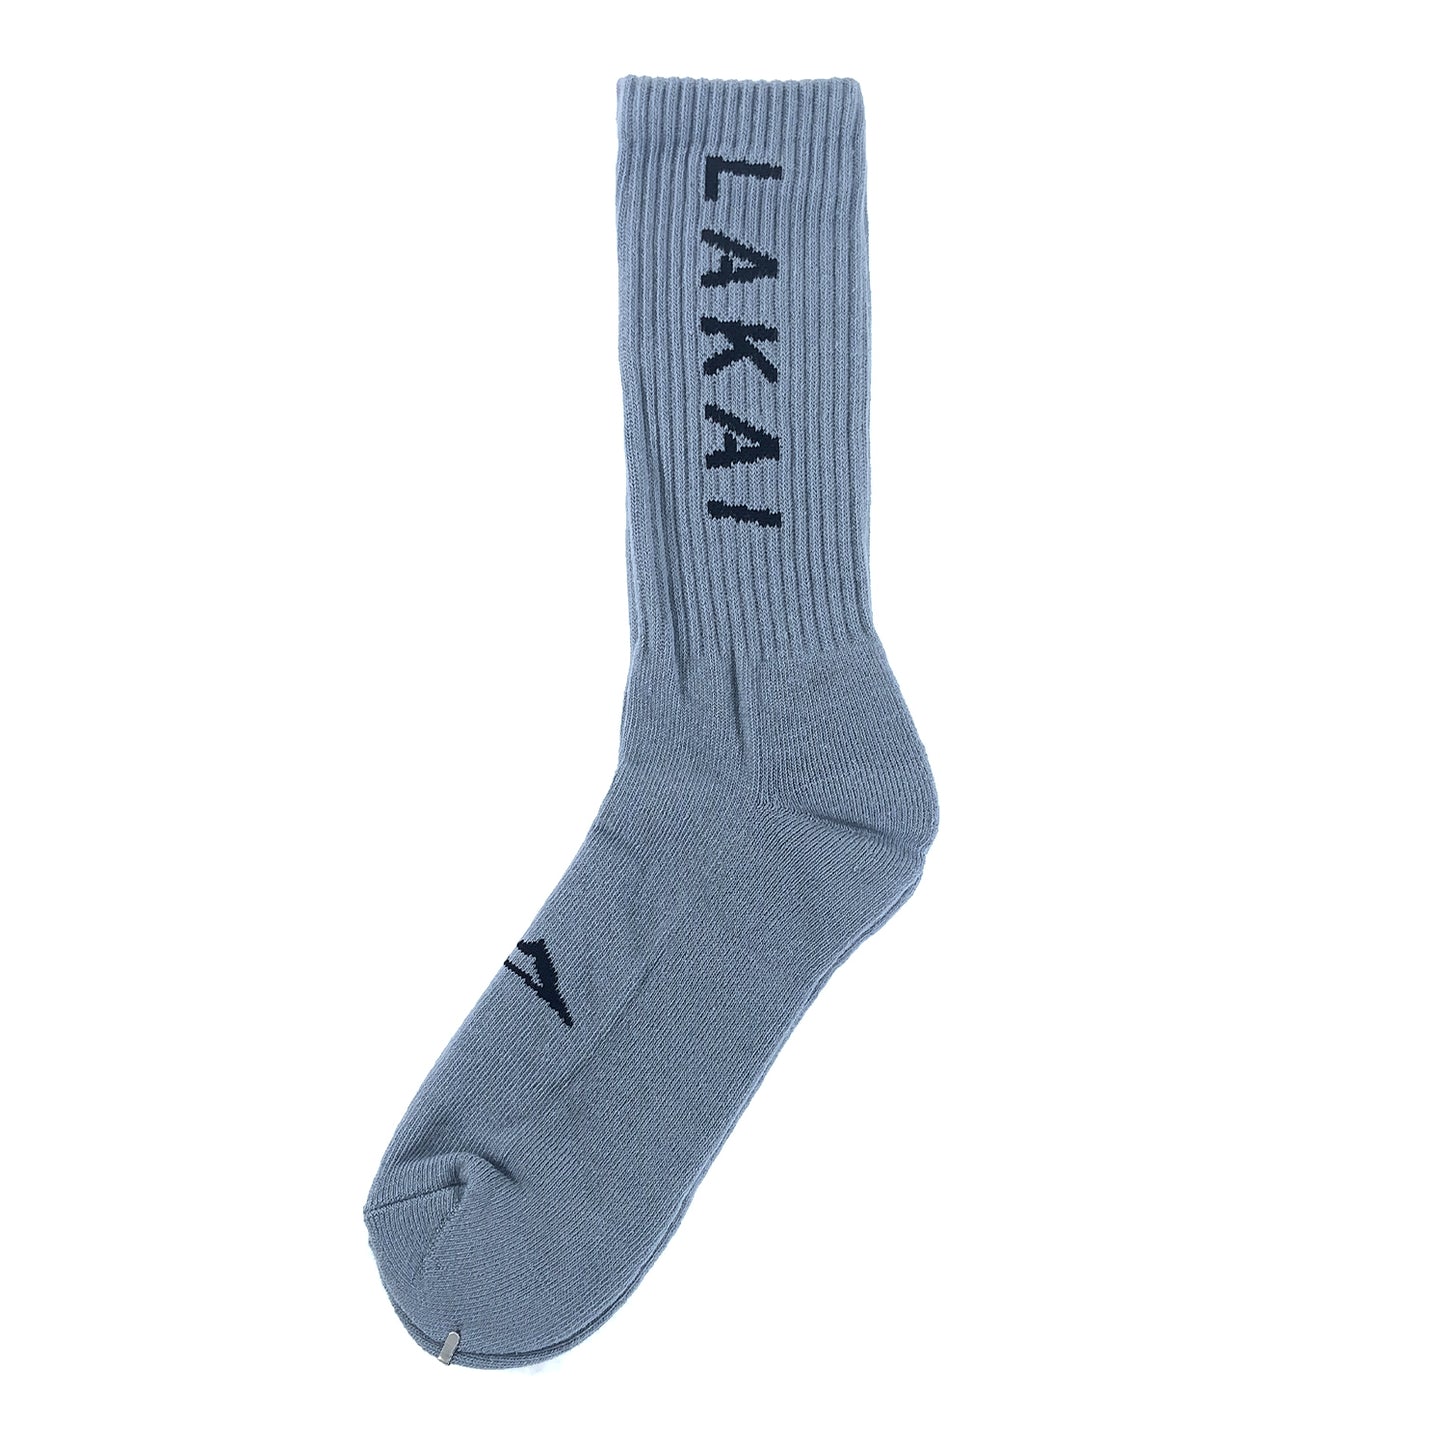 Lakai - Simple Crew Socks - Muted Blue - Prime Delux Store